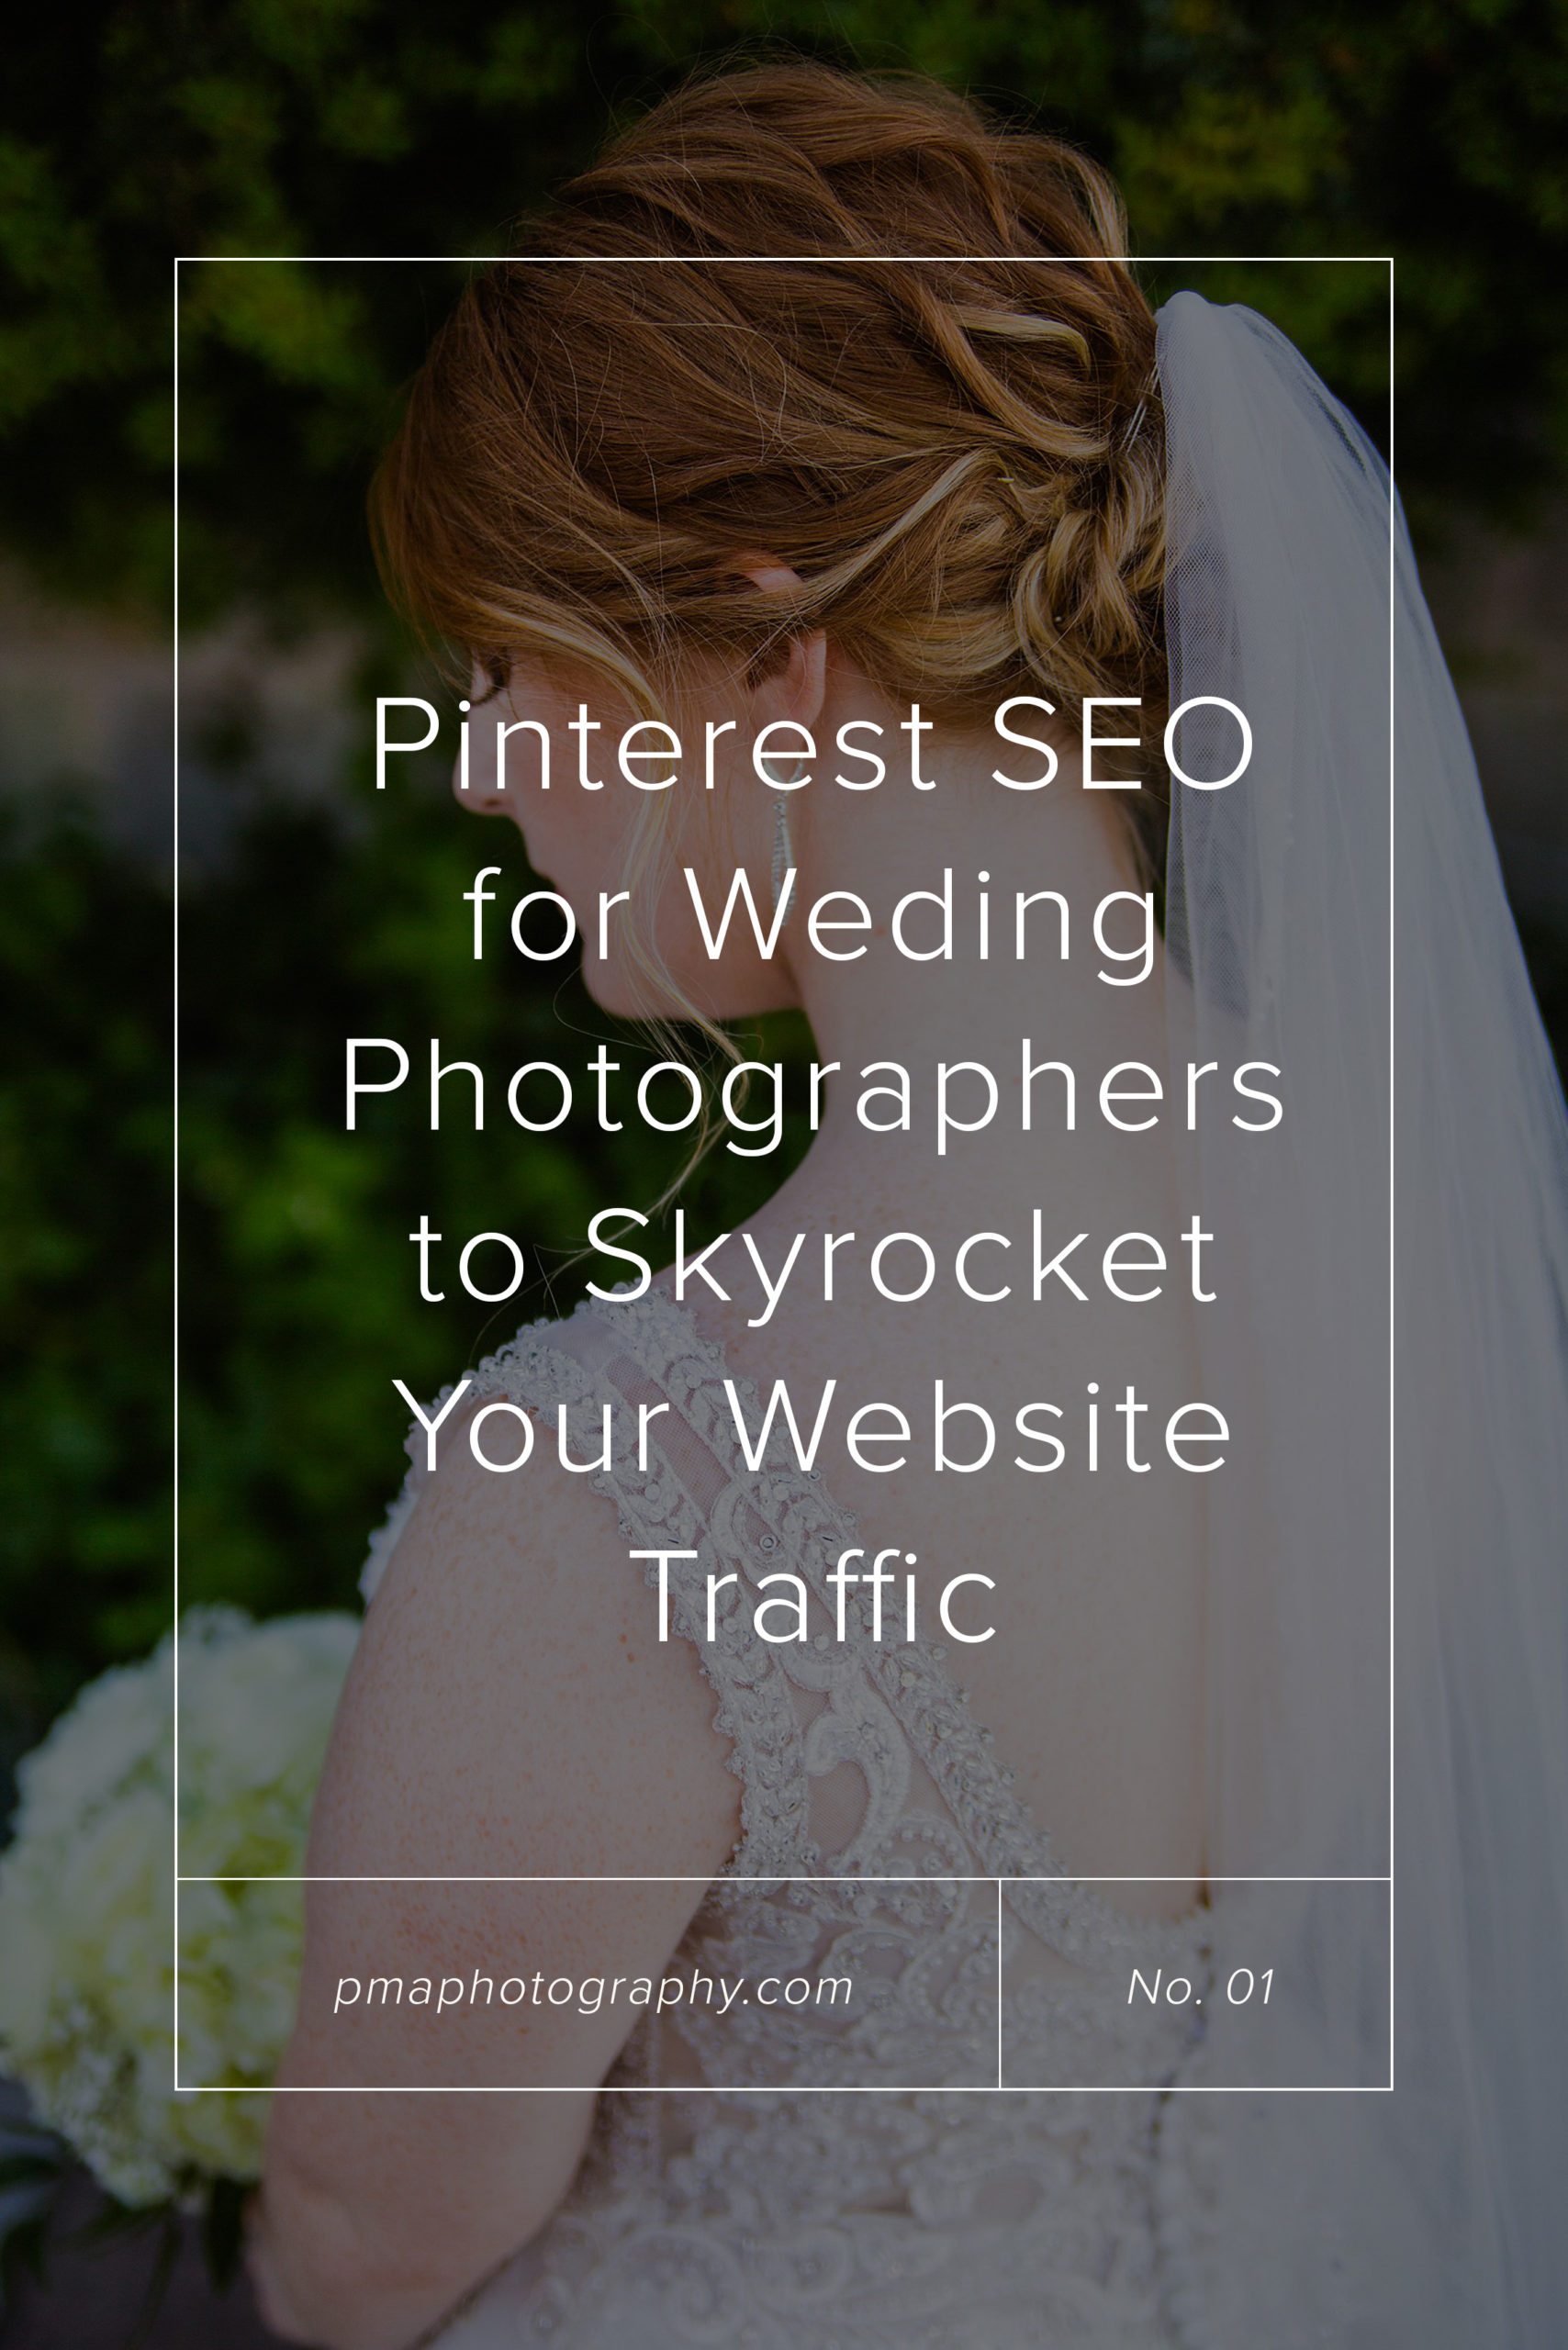 Pinterest SEO tips for wedding photographers to skyrocket your website traffic.